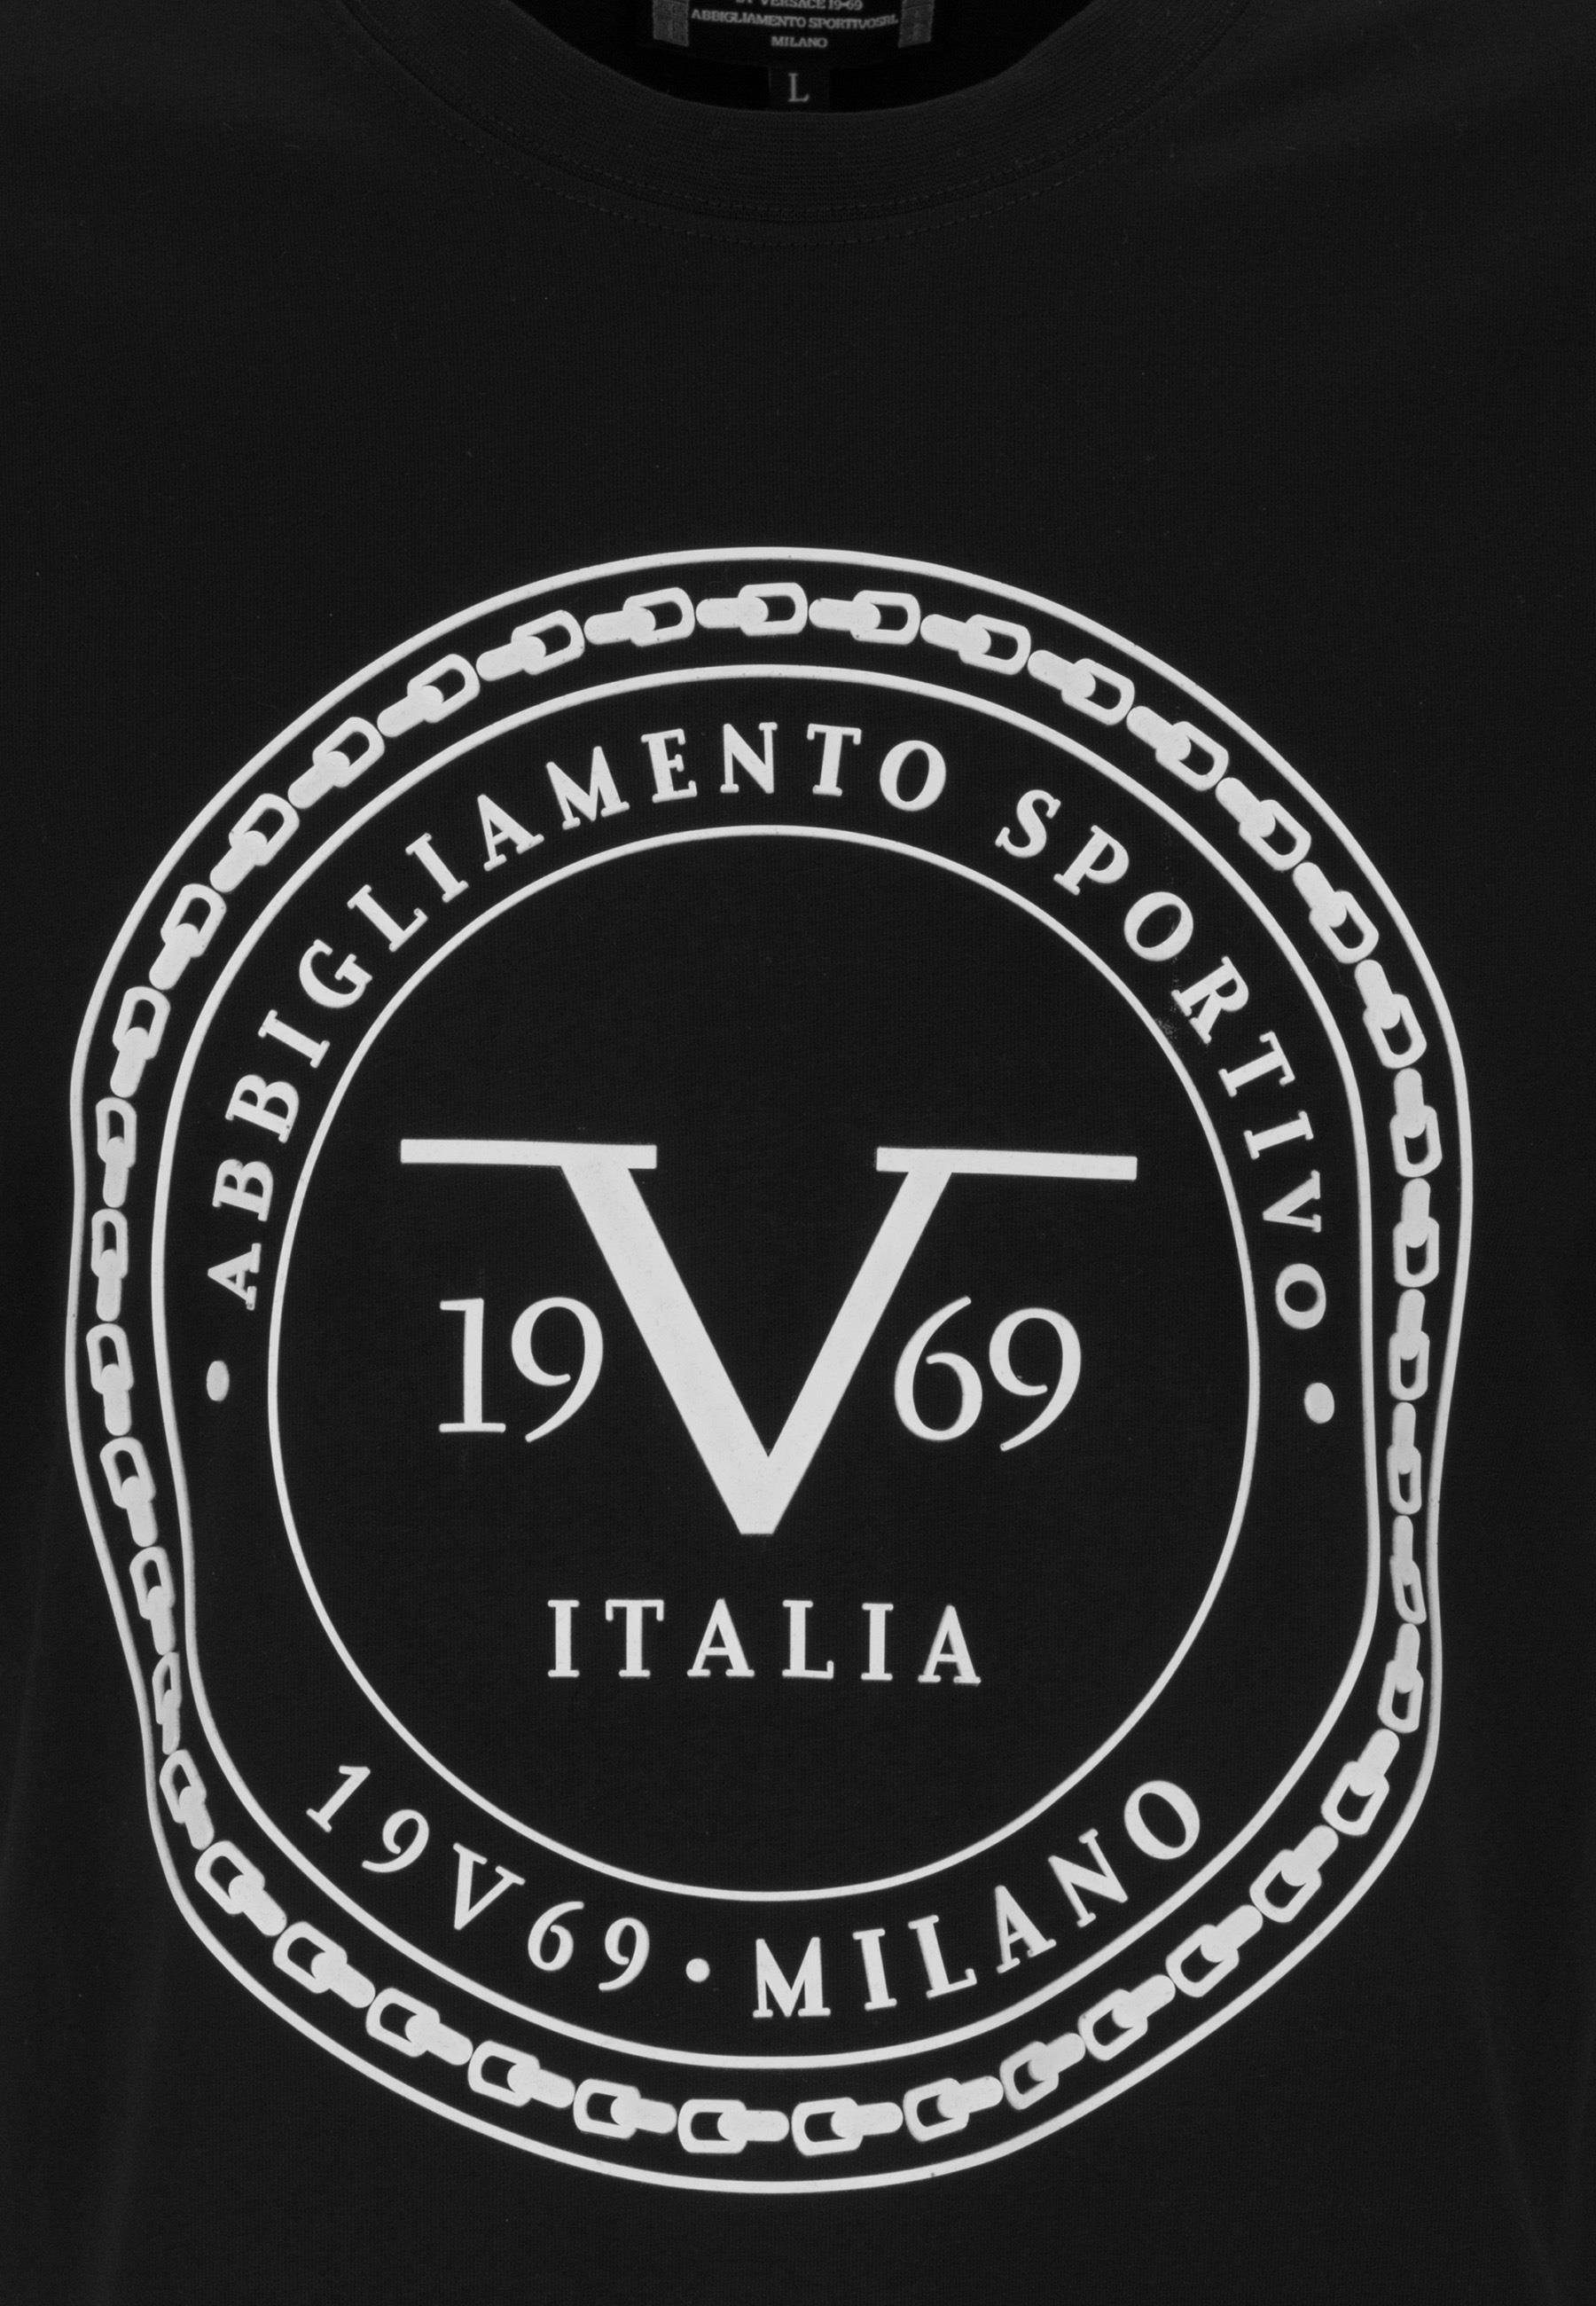 Felix T-Shirt Versace BLACK T-Shirt by Italia 19V69